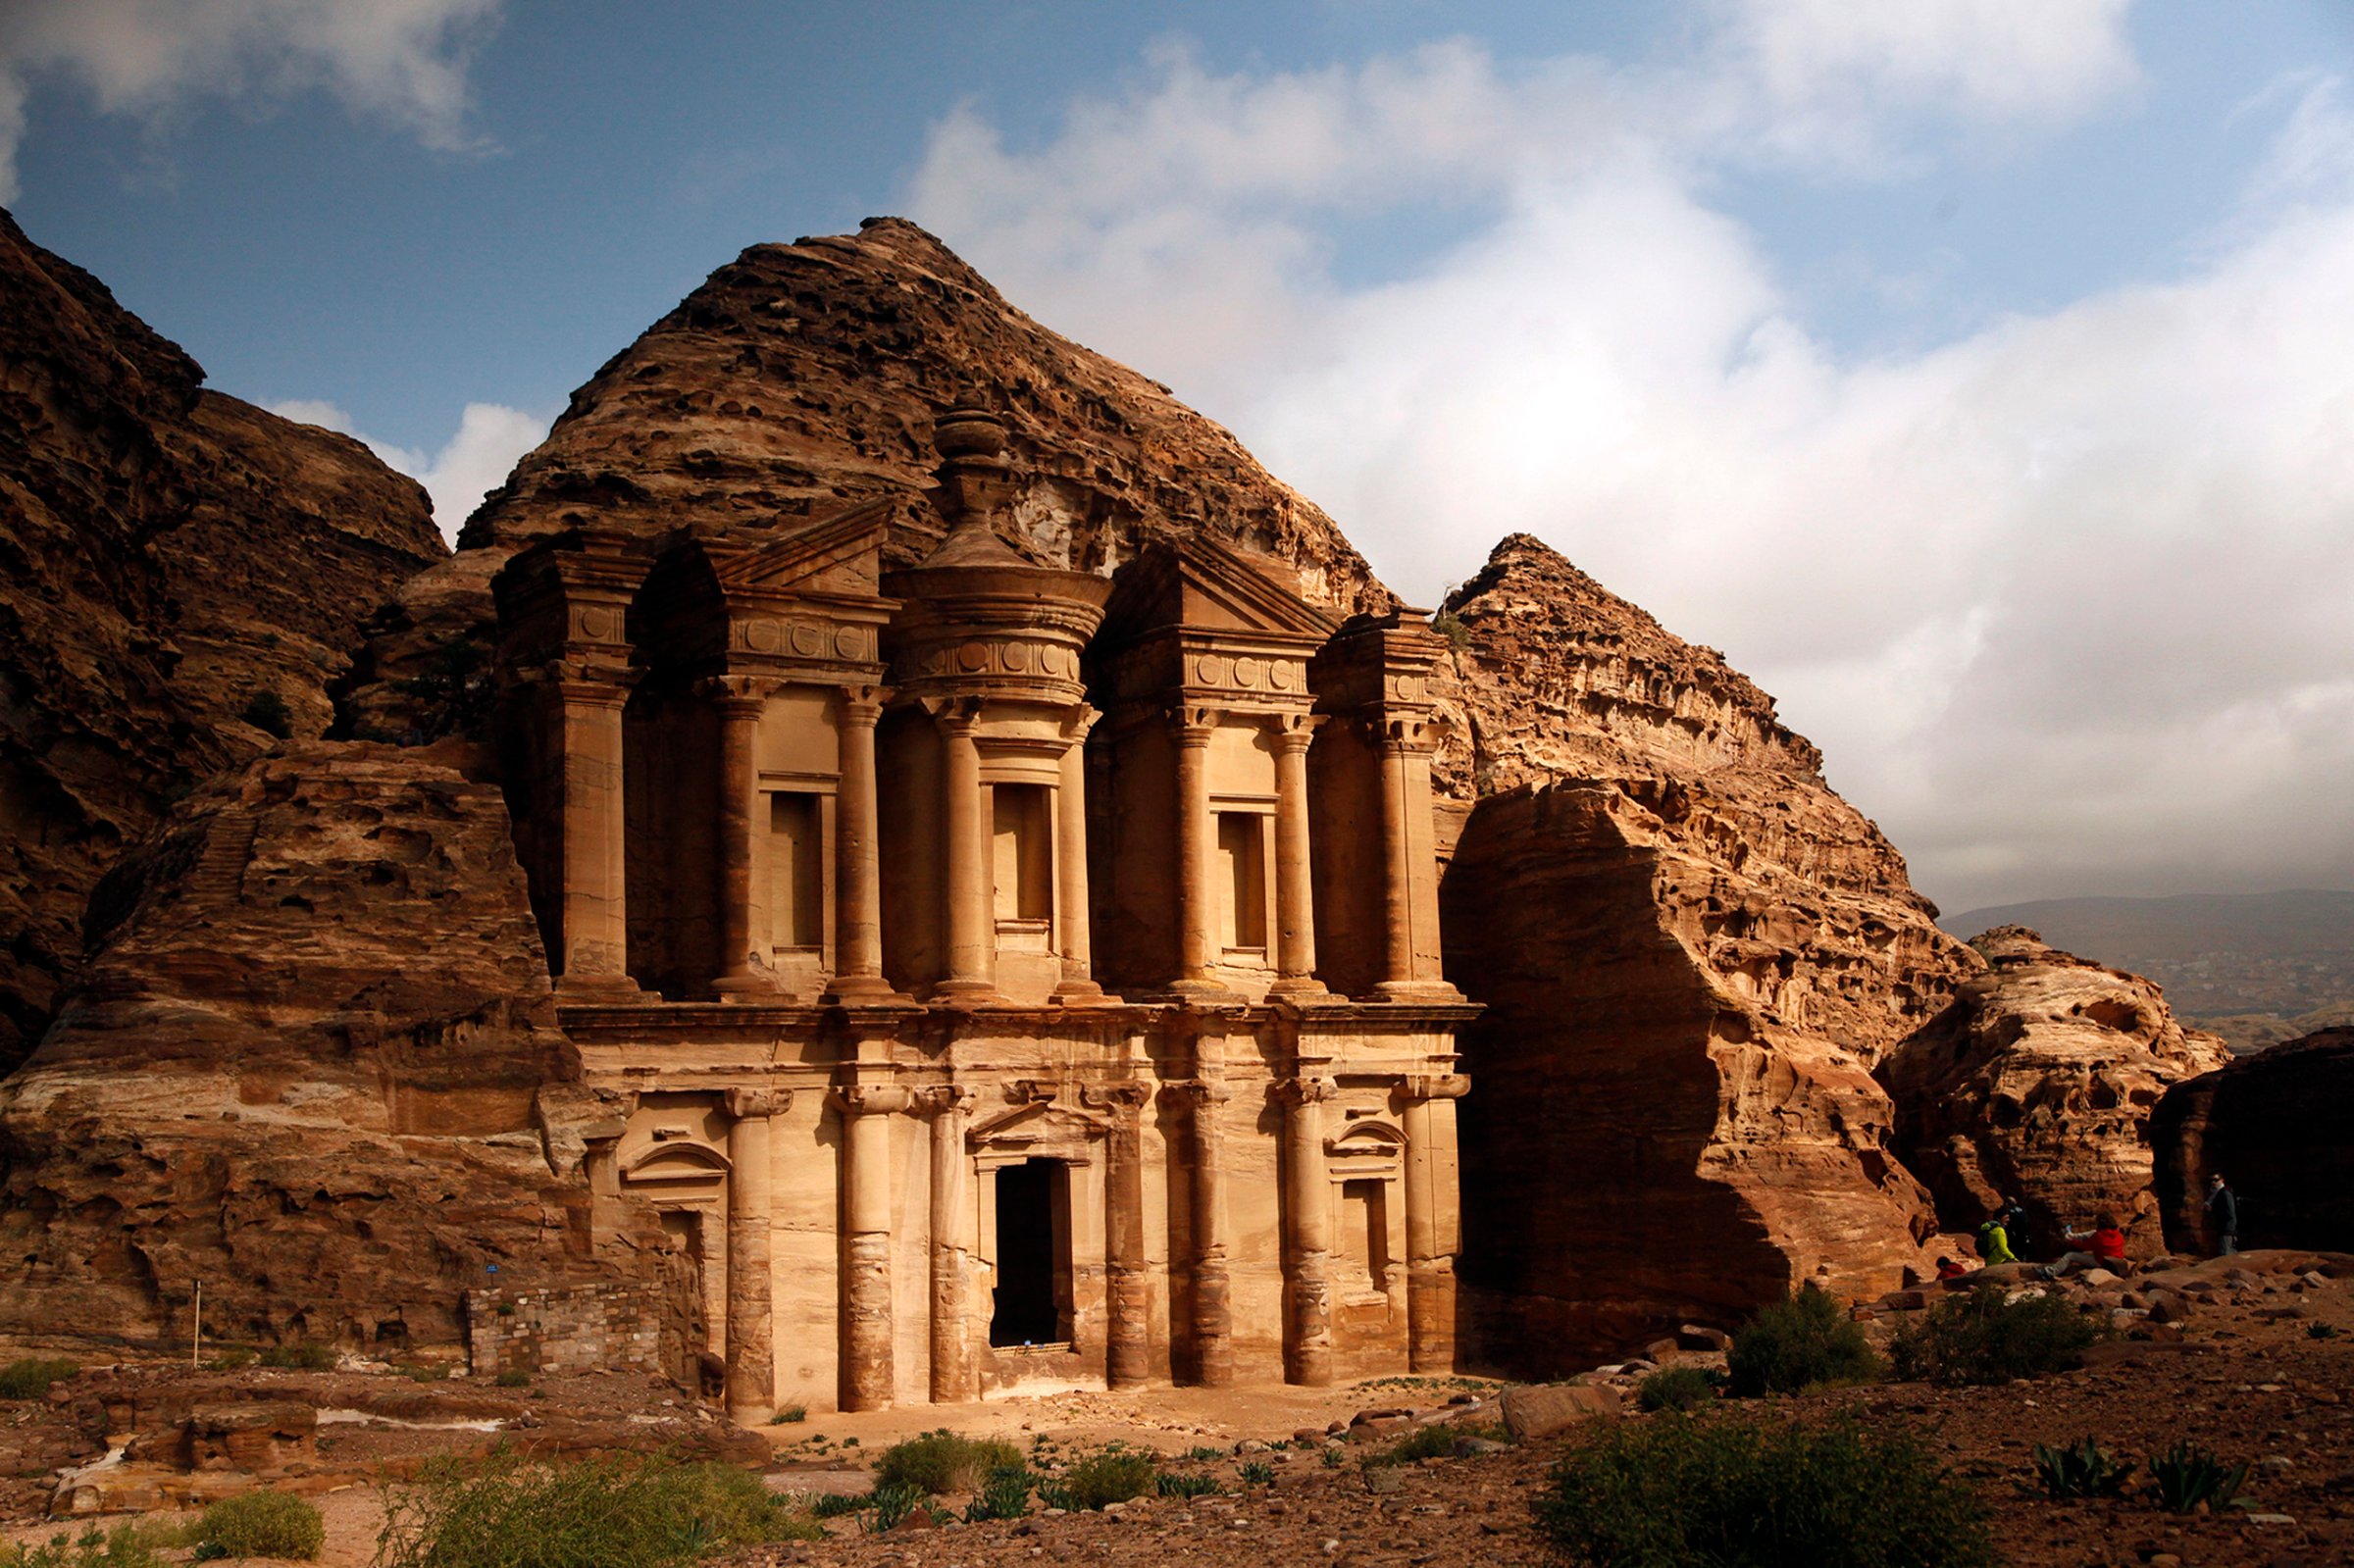 The monastery in Petra, a world famous landmark in southern Jordan, Feb. 23, 2016.